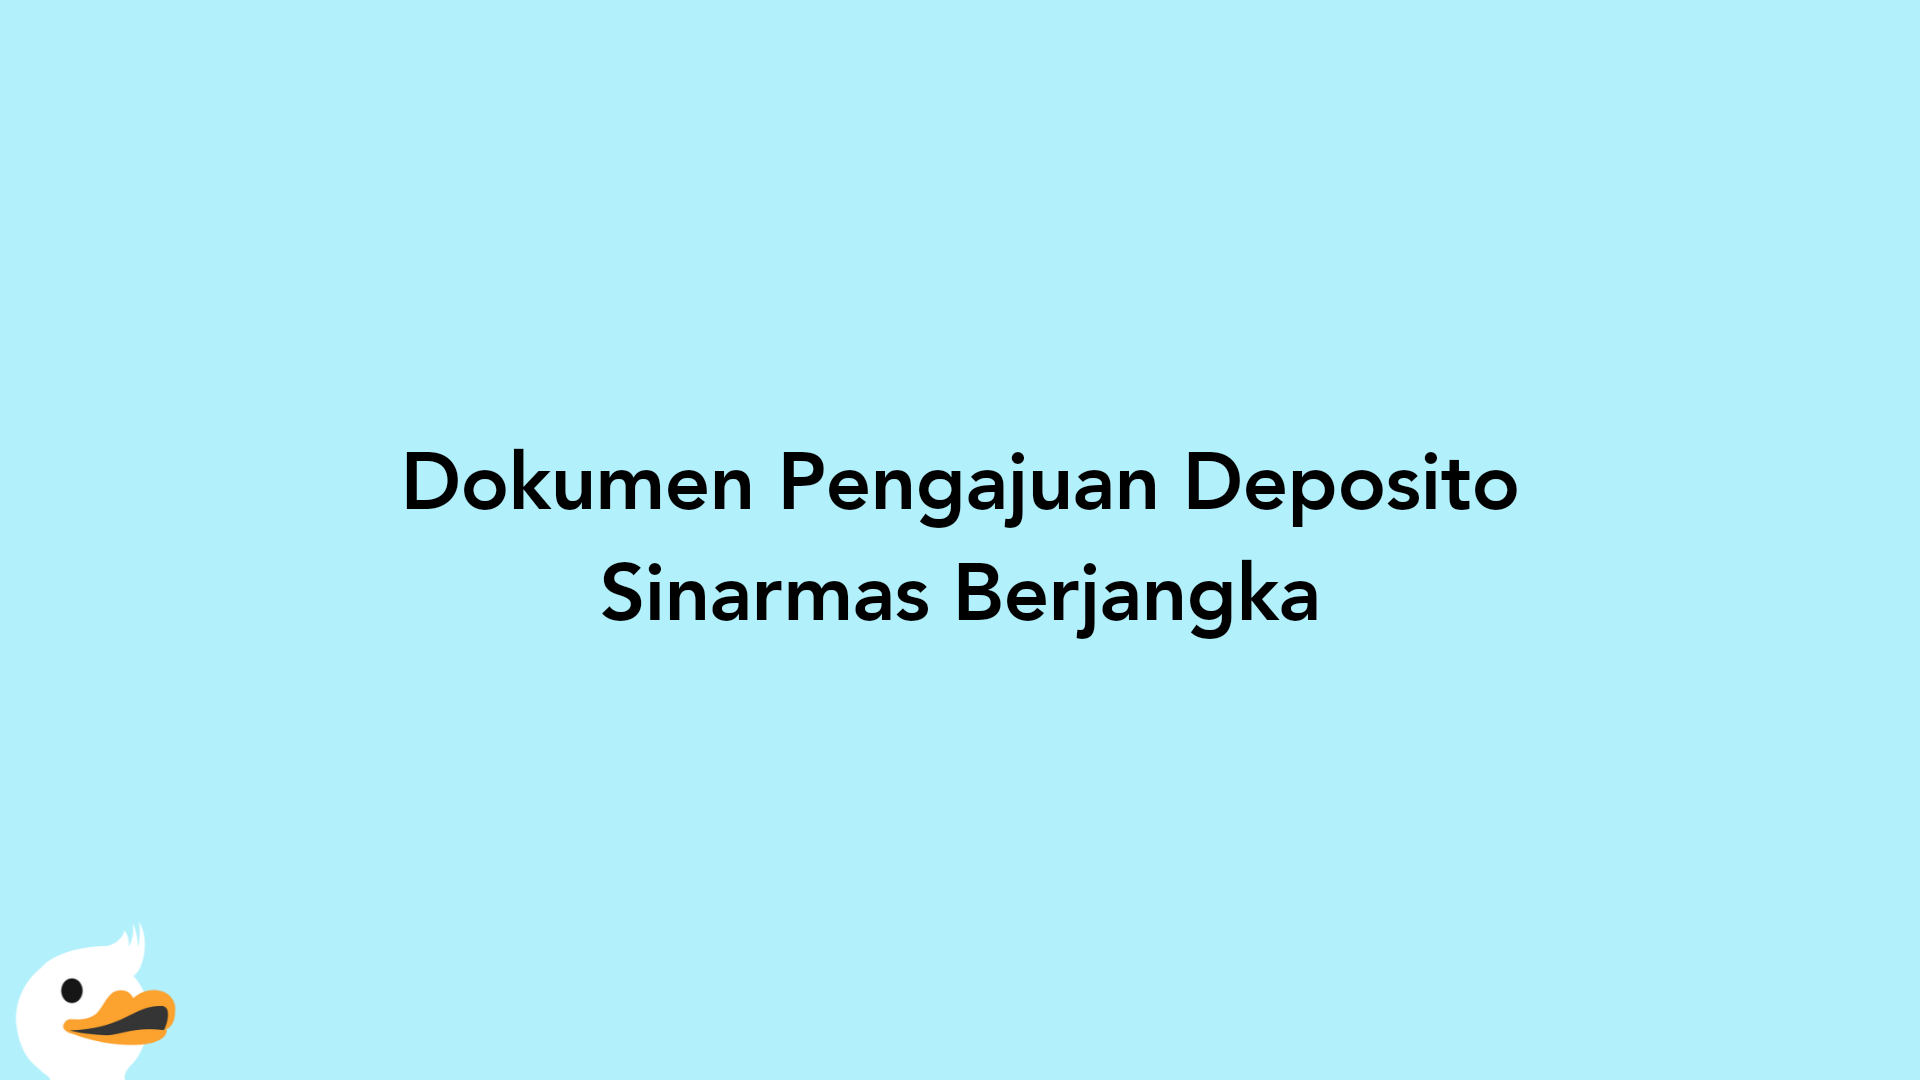 Dokumen Pengajuan Deposito Sinarmas Berjangka